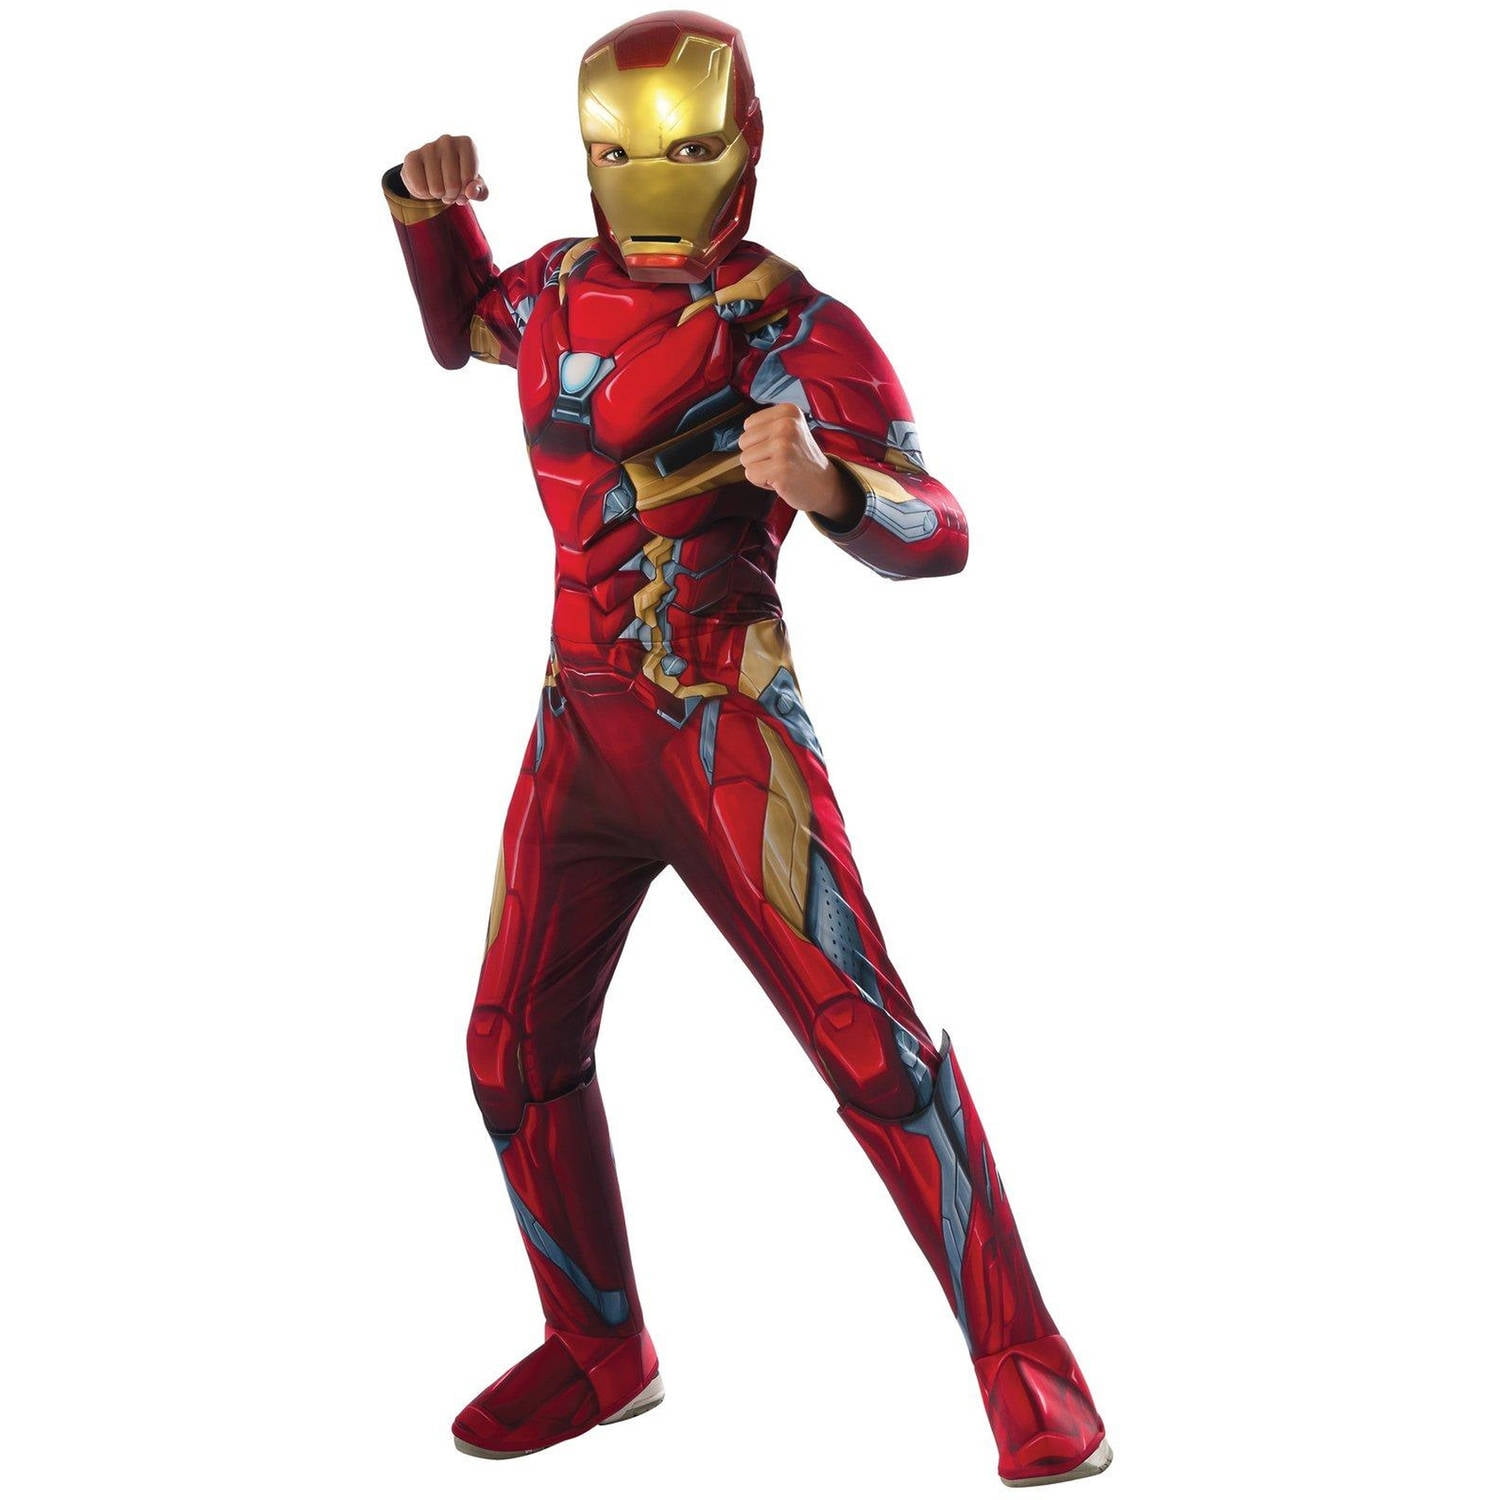 Boys Deluxe Iron Man Costume Marvel Avengers Superhero Child Fancy Dress Outfit+